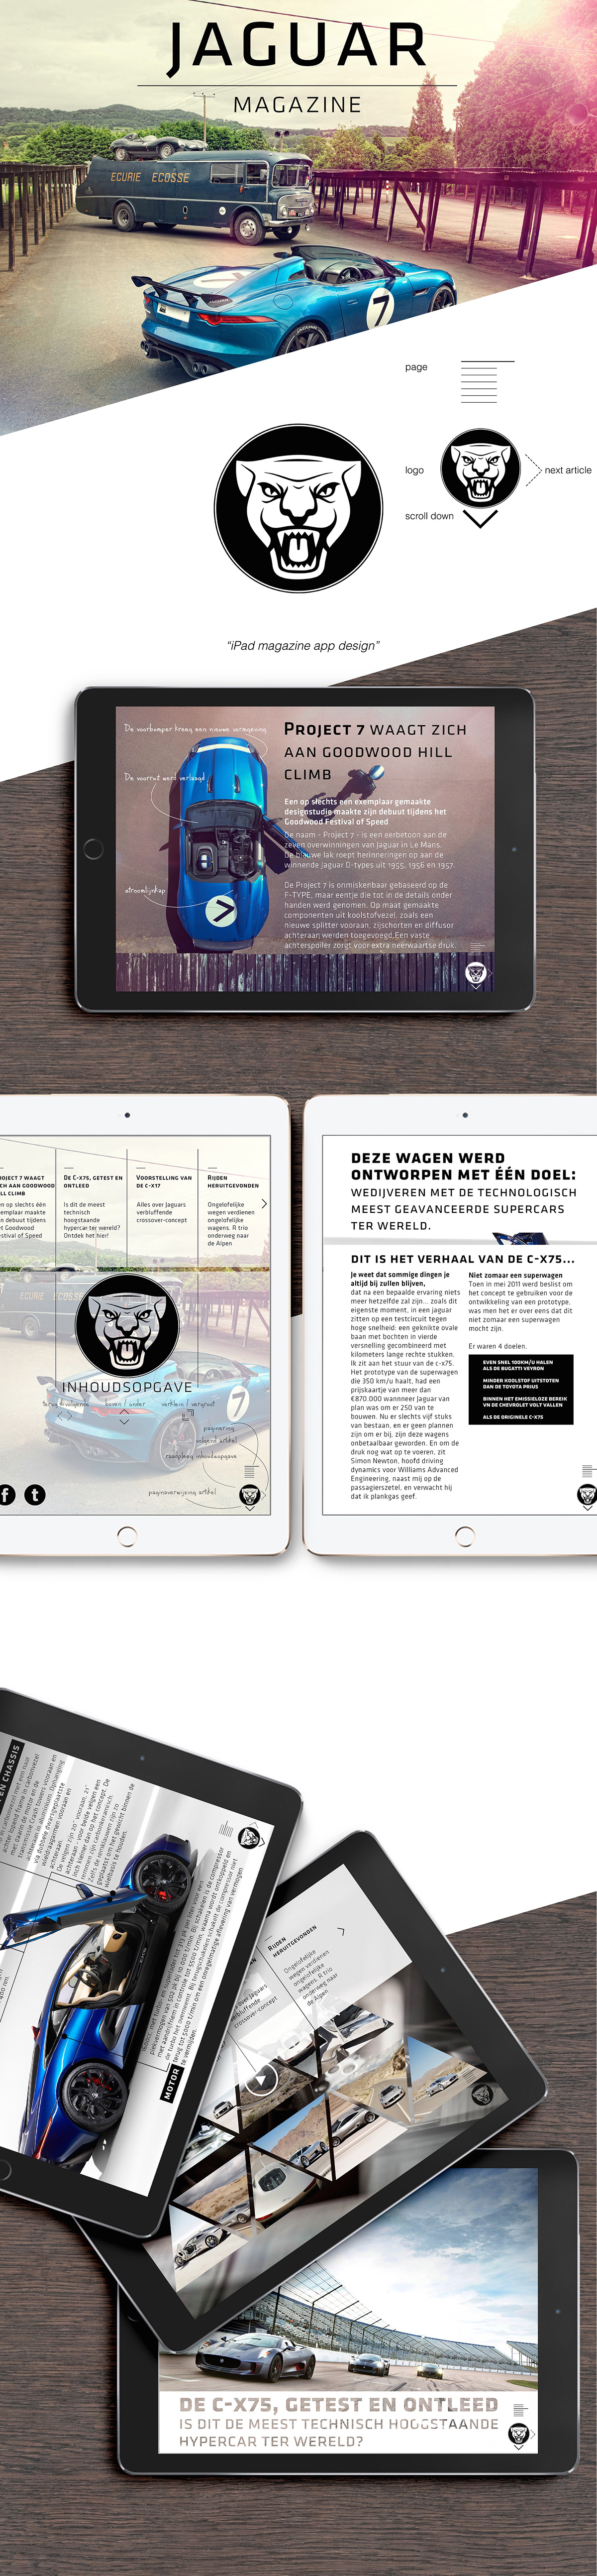 jaguar magazine iPad application car Cars